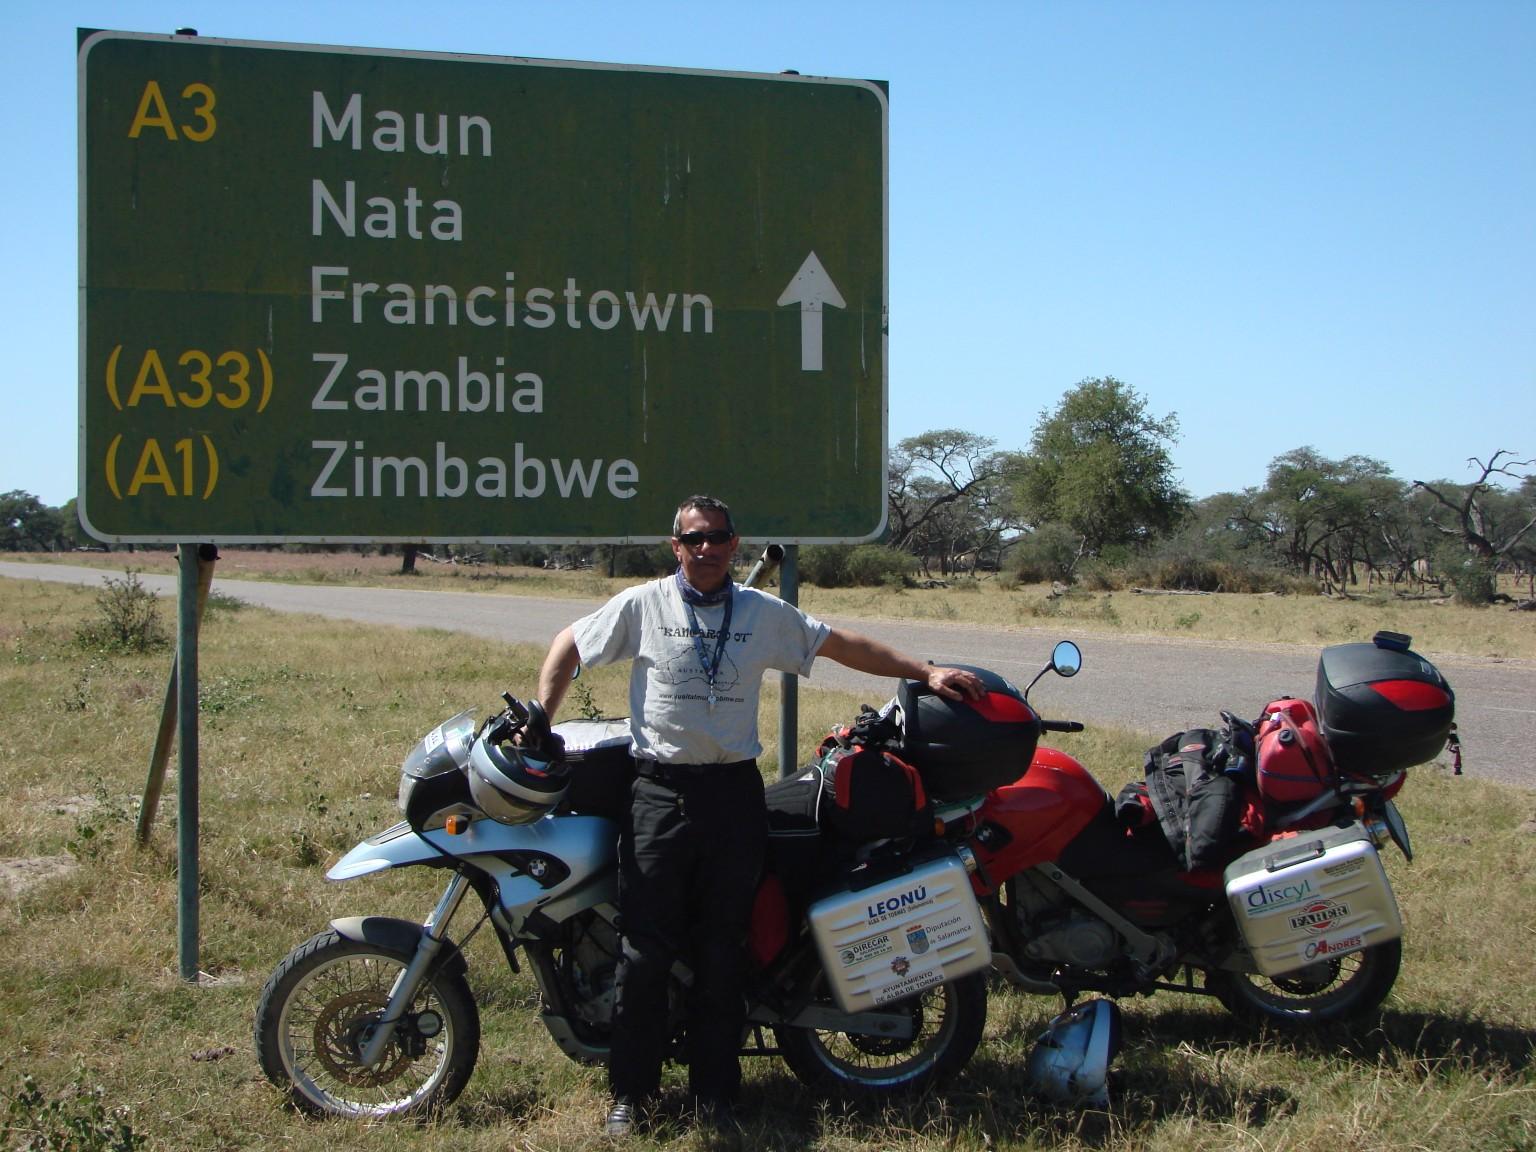 * 2008 SUDAFRICA, NAMIBIA, BOTSWANA, ZAMBIA Y ZIMBABWE